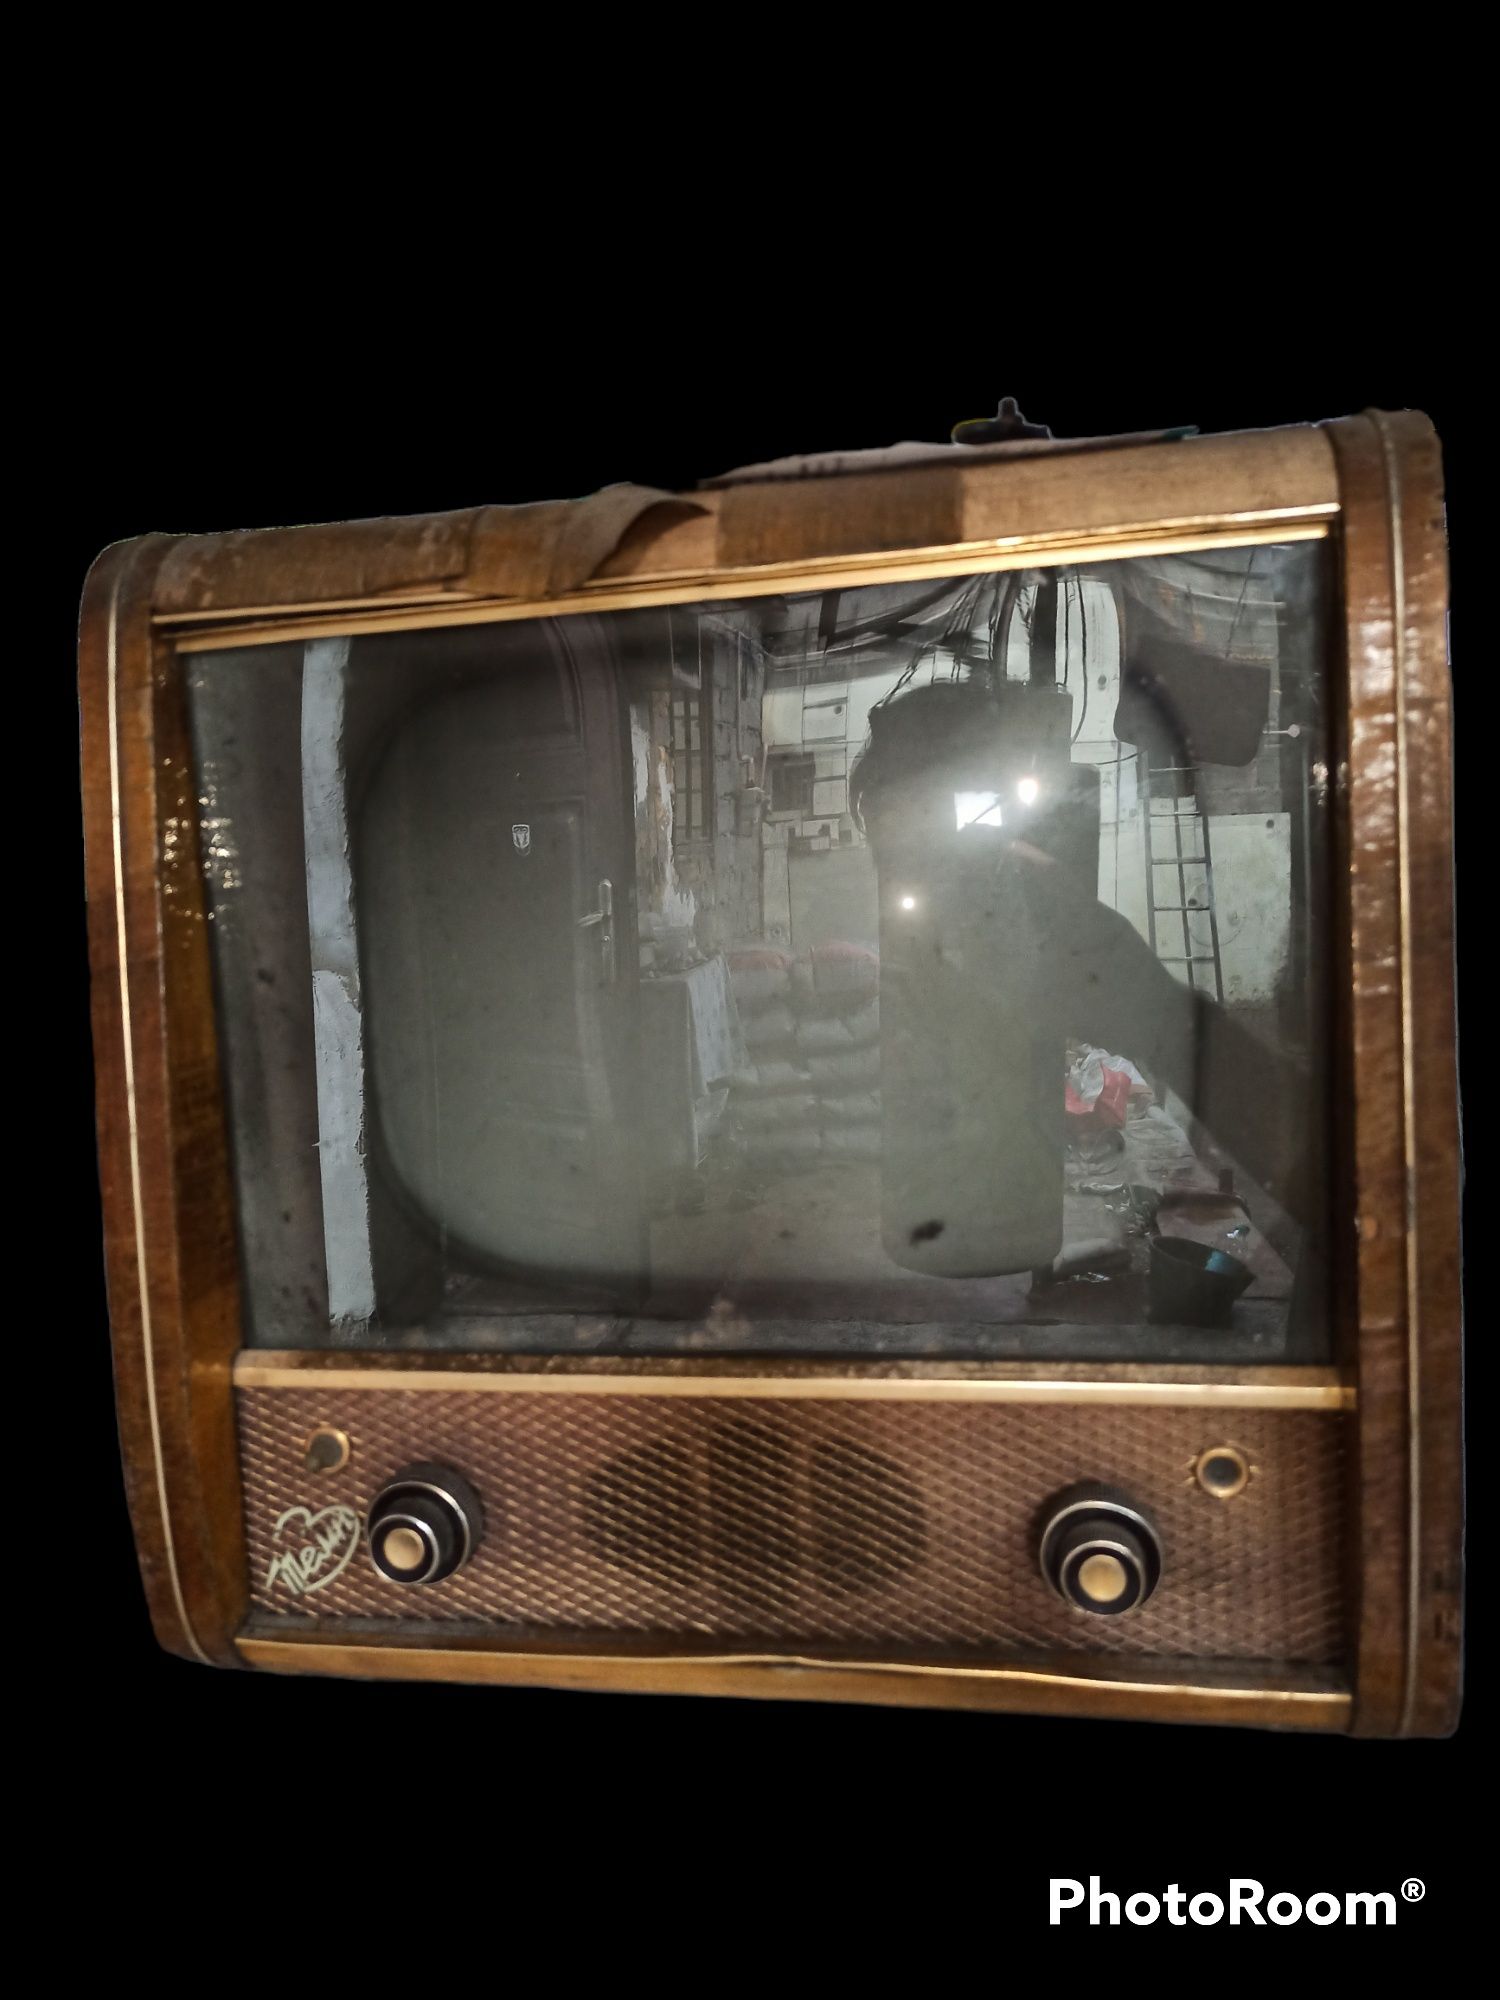 Телевизор Темп-3 радиотехника Советский коллекционный телевизор